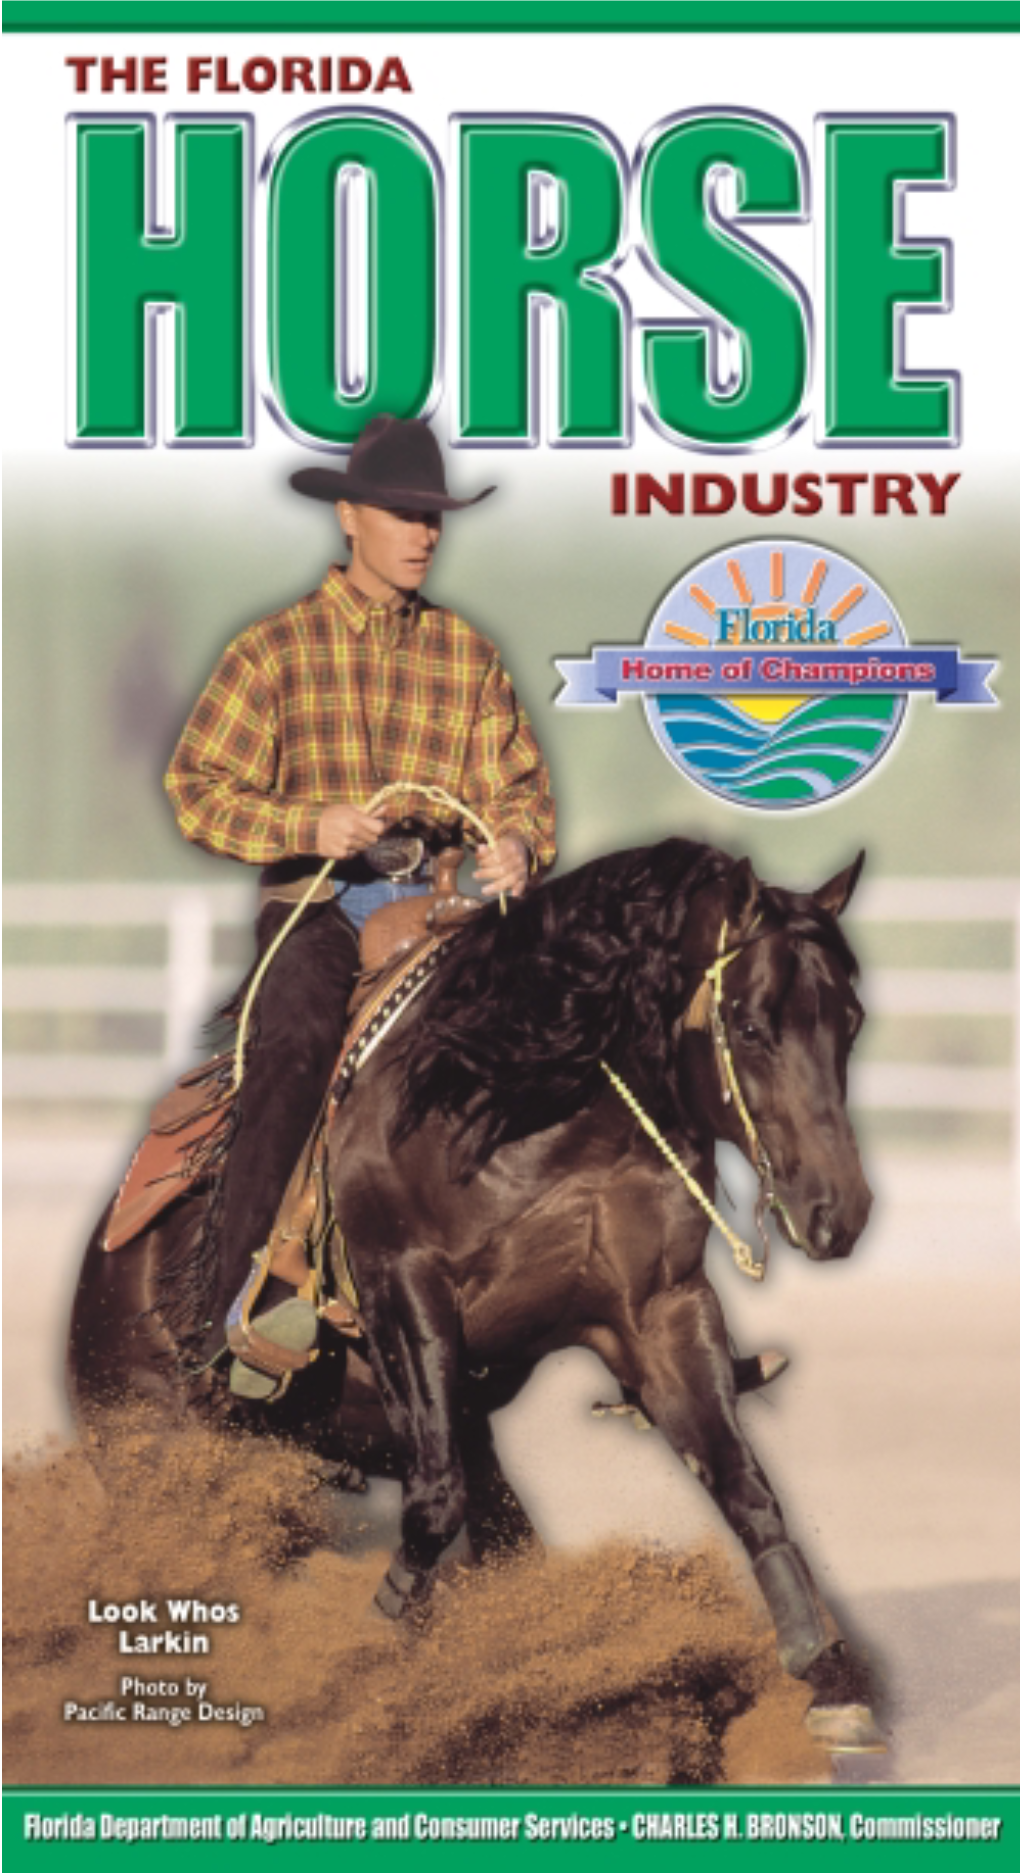 Florida Horse Industry Brochure